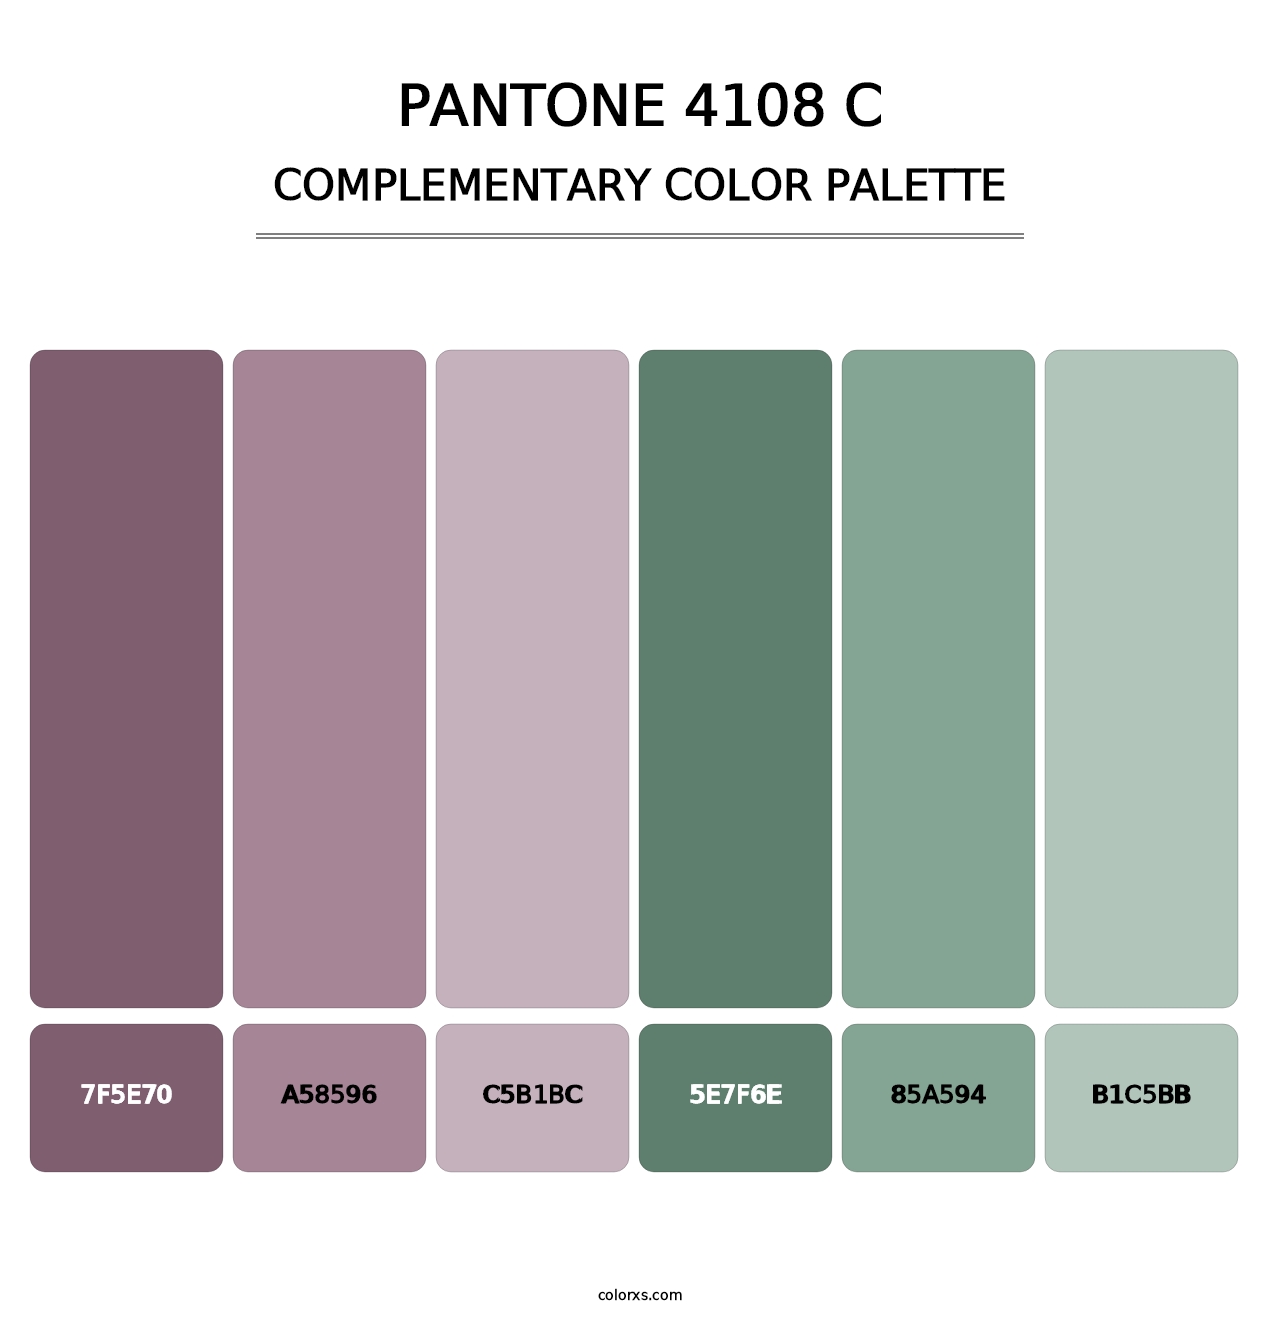 PANTONE 4108 C - Complementary Color Palette